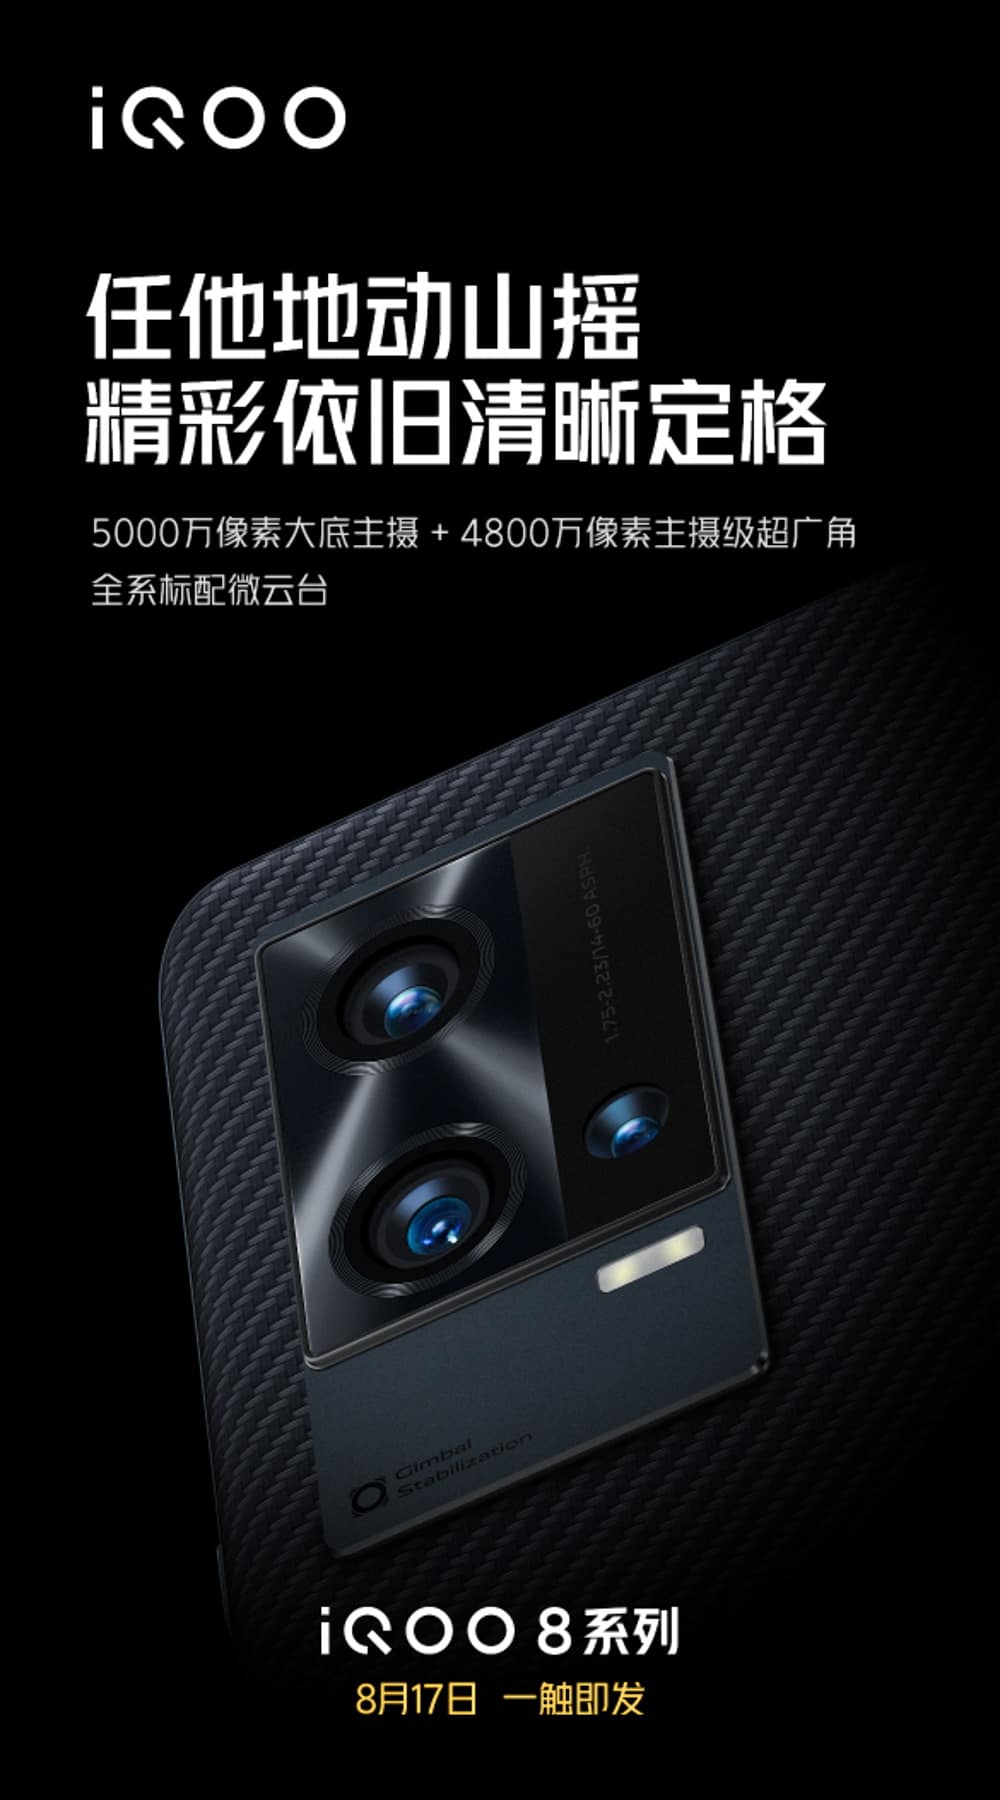 Pôster oficial da iQOO mostra iQOO 8 Pro e seu desing traseiro